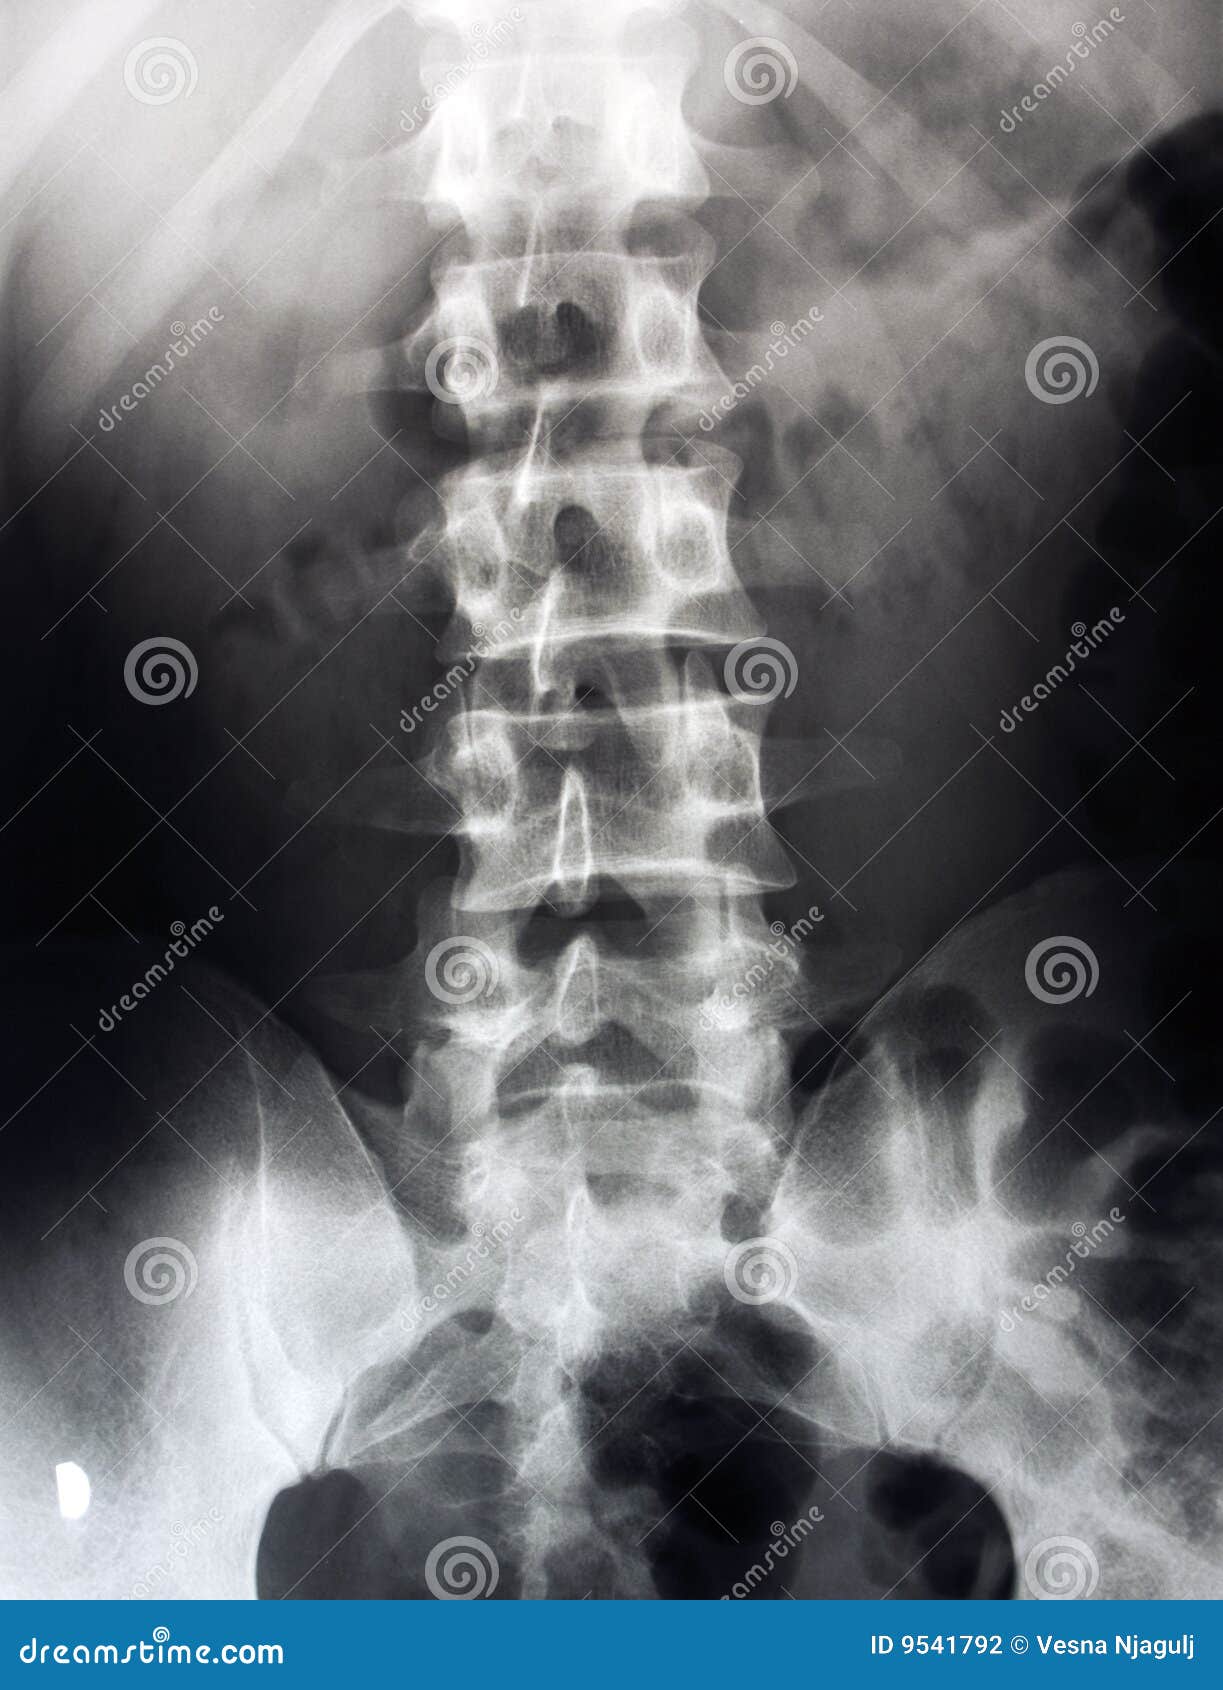 lumbar spine x-ray, lower back